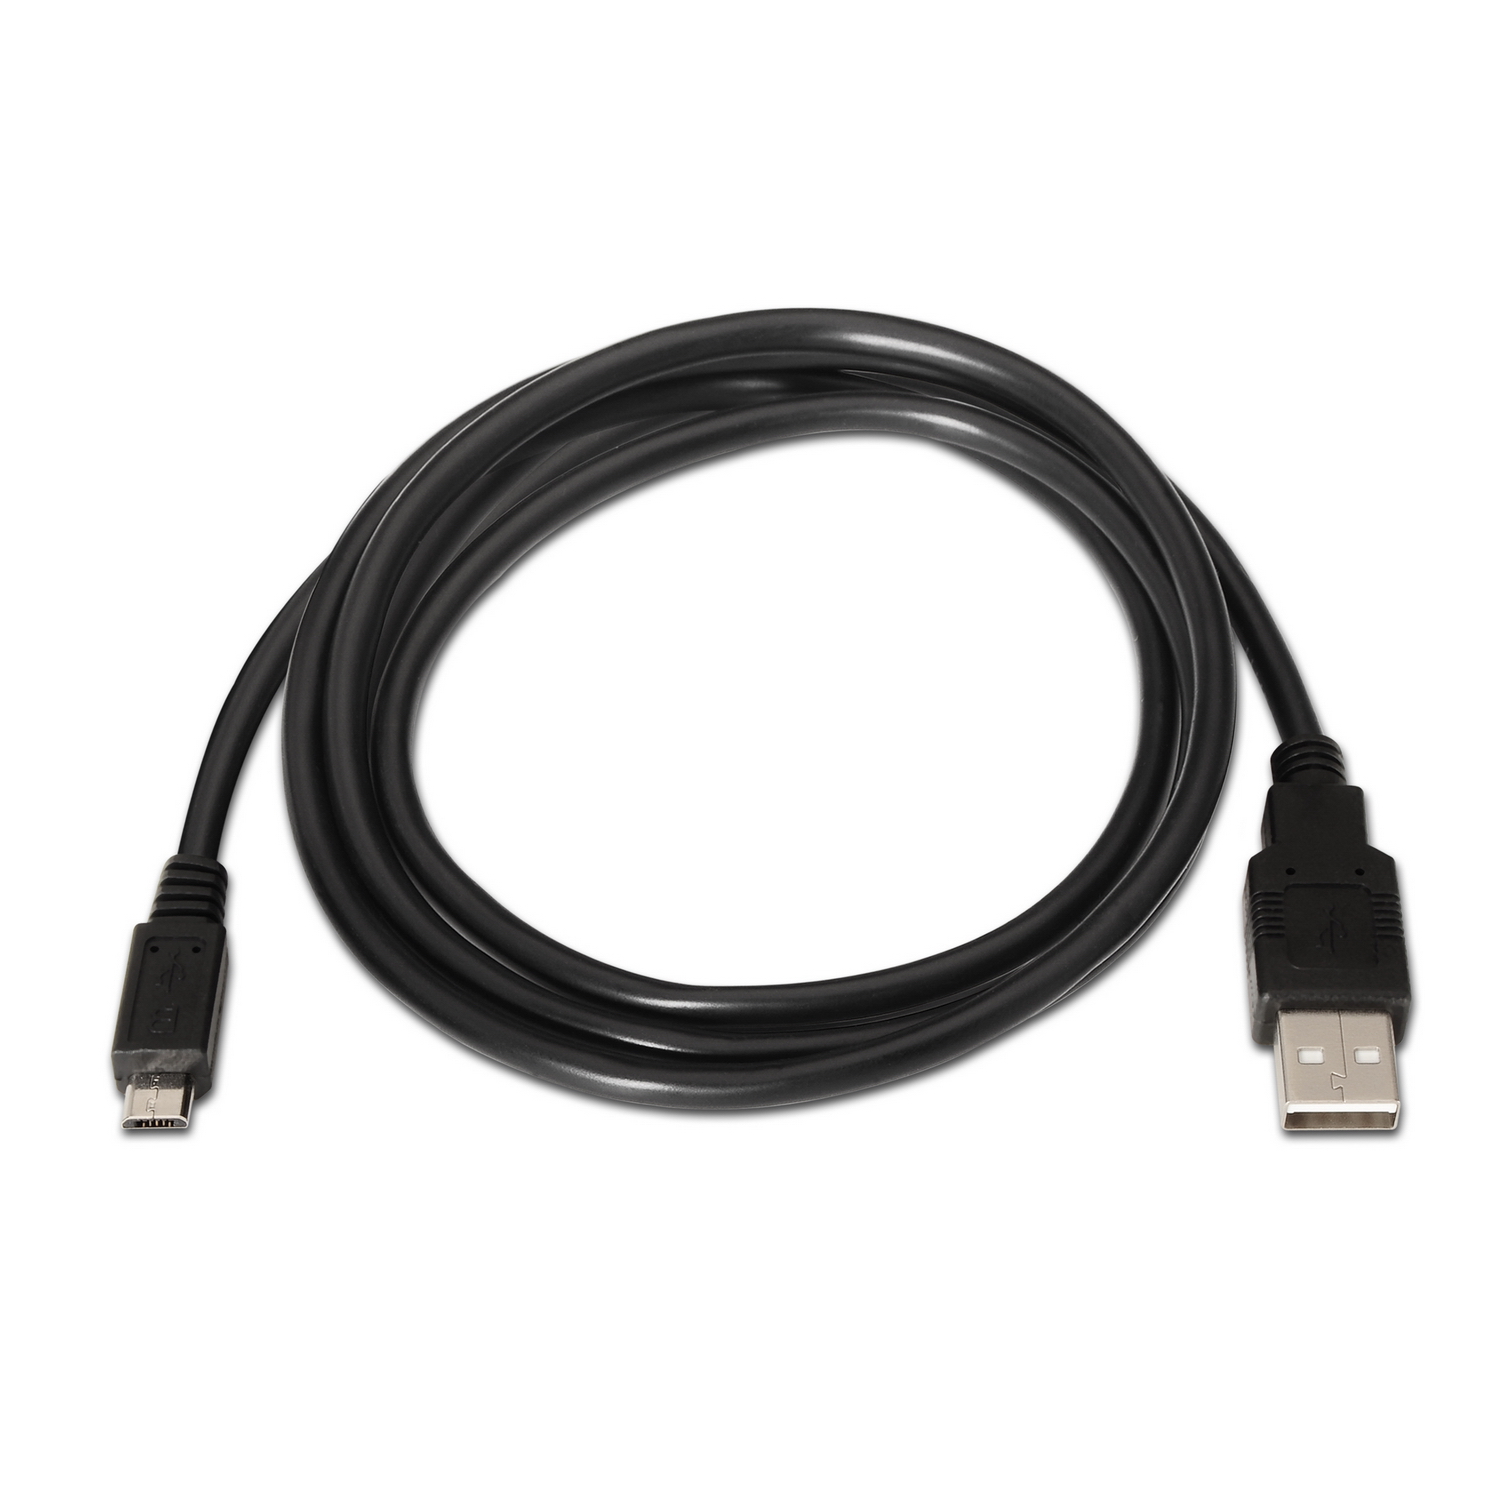 Cable USB 2.0 impresora, tipo A Macho a tipo B Macho, 1.0 metros. - AISENS®